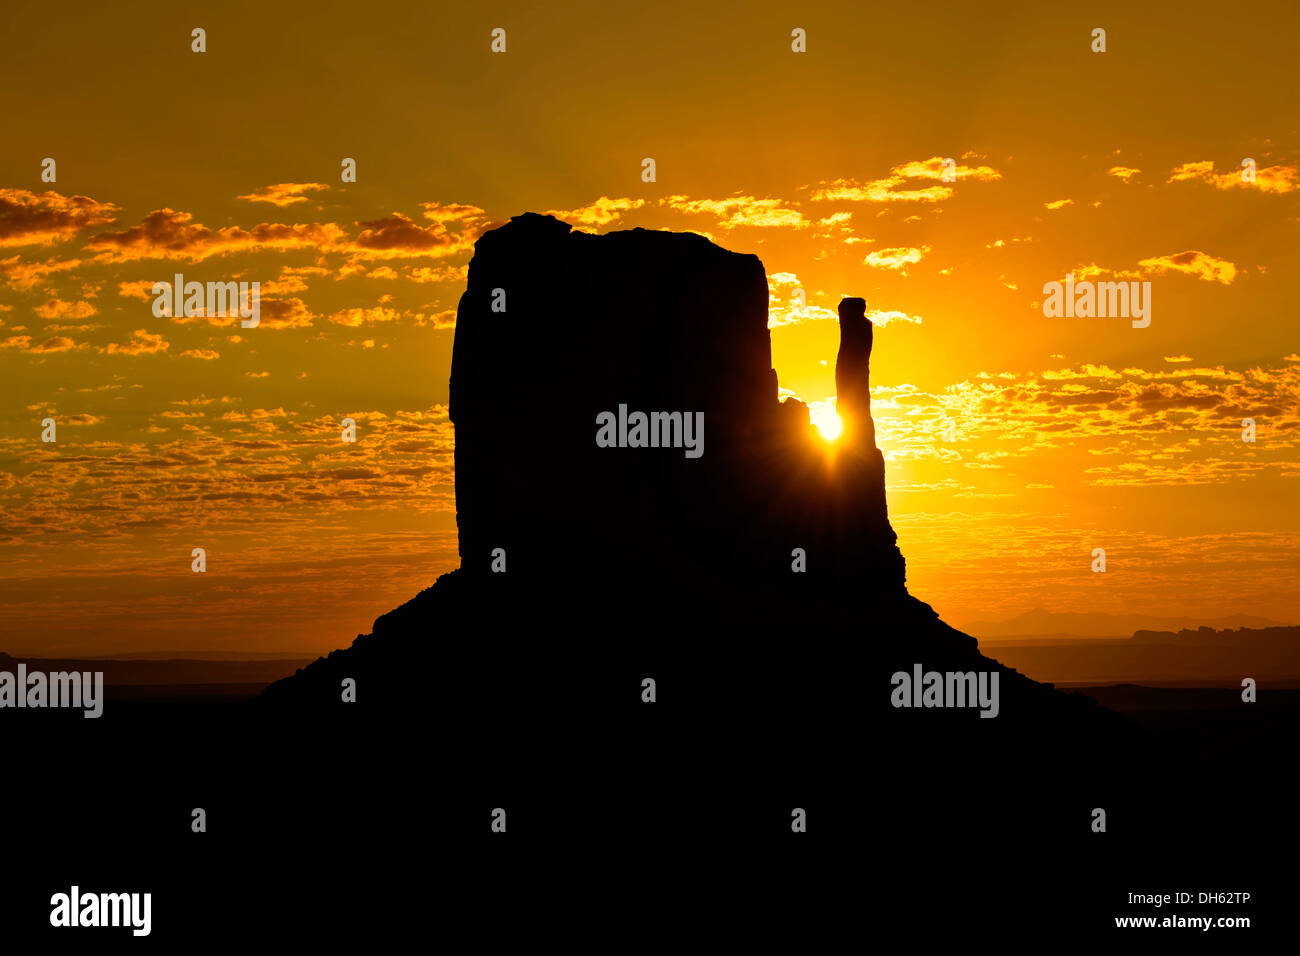 Mesa West Mitten Butte bei Sonnenaufgang, Monument Valley Navajo Tribal Park Navajo Nation Reservation, Arizona, Utah, Südwesten Stockfoto